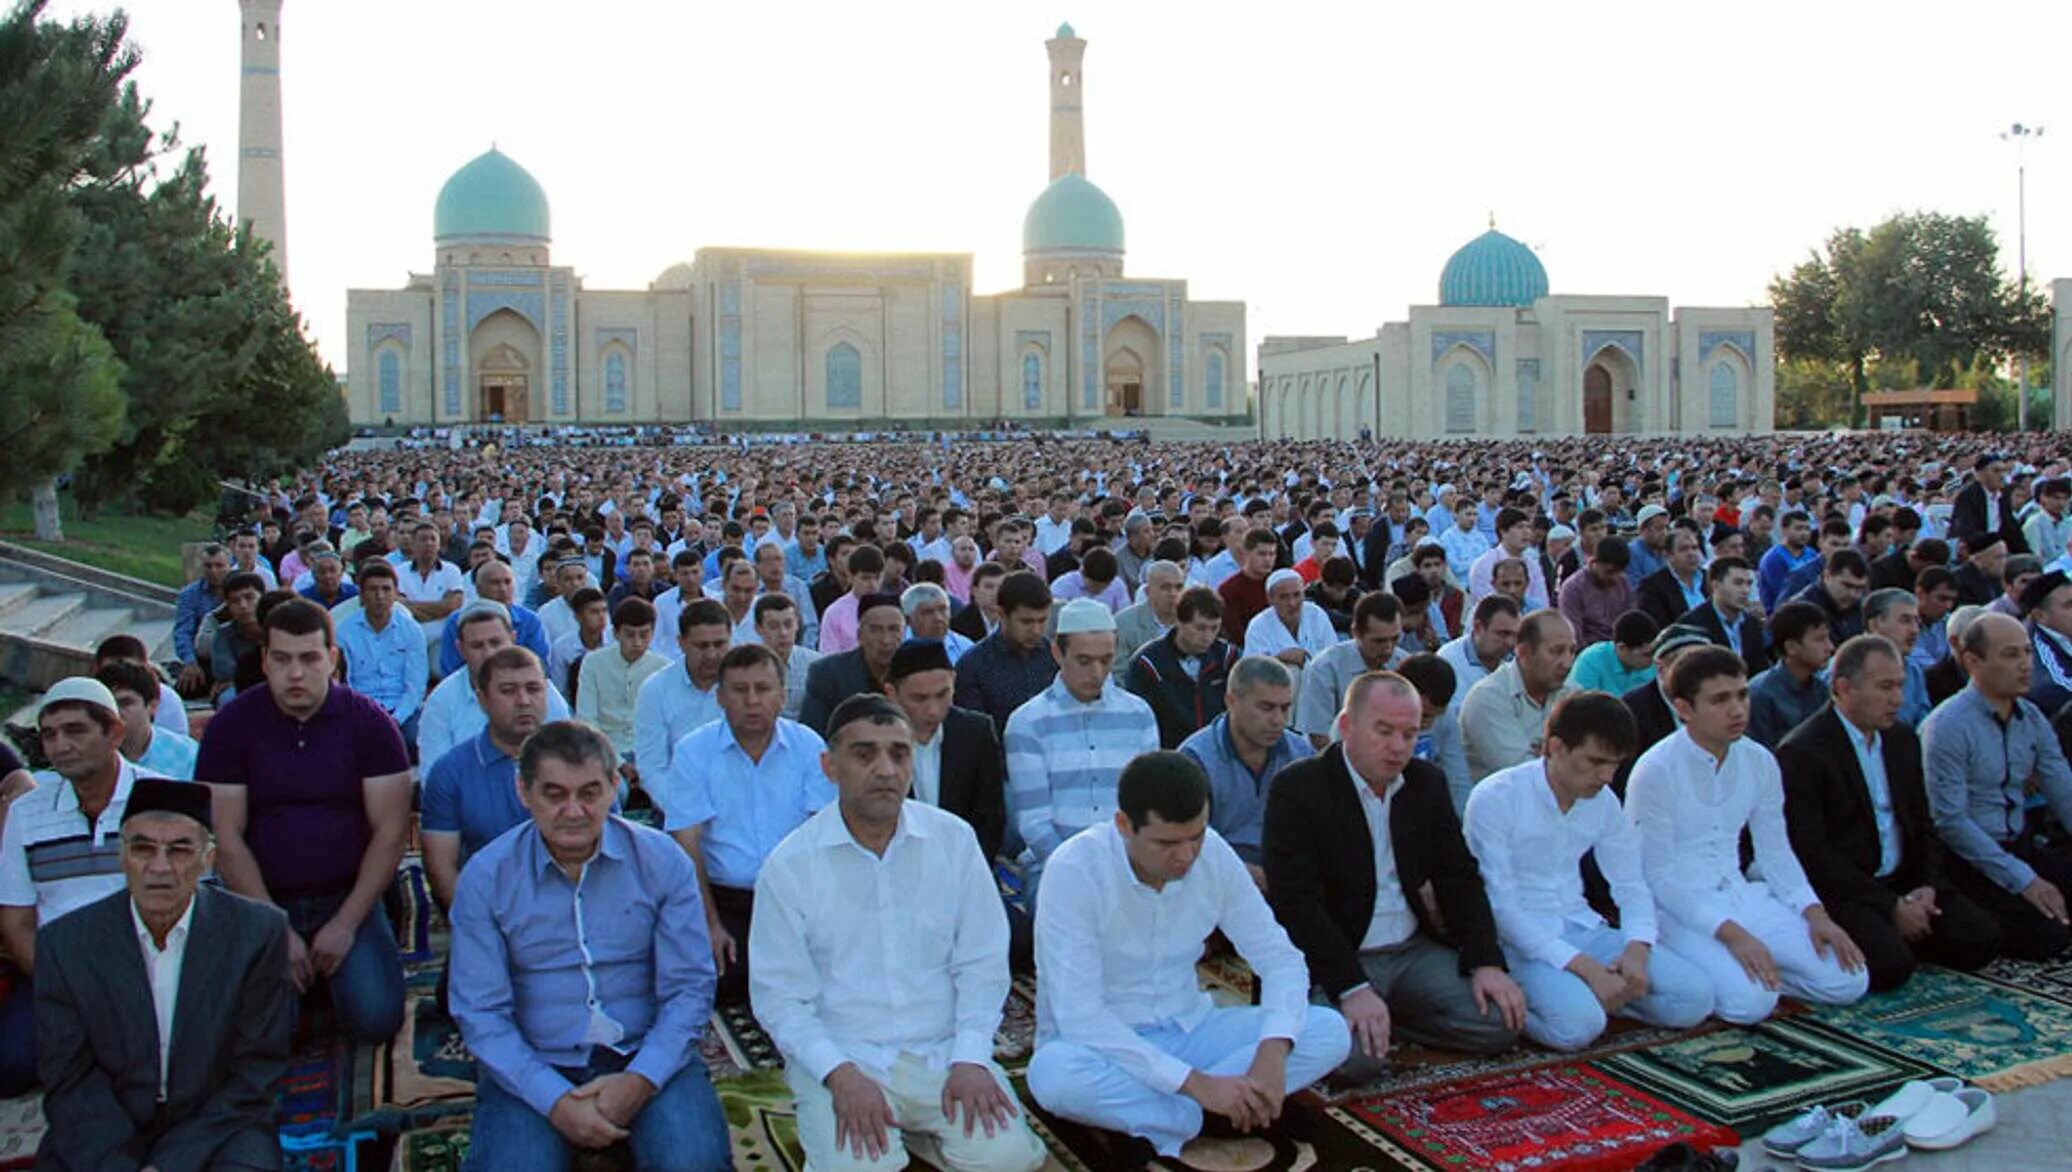 Курбан хайит в Узбекистане. Рамазан Хаит в Узбекистане. Курбан Хаит Ташкент мечеть. Праздник Курбан Хаит в Узбекистане.